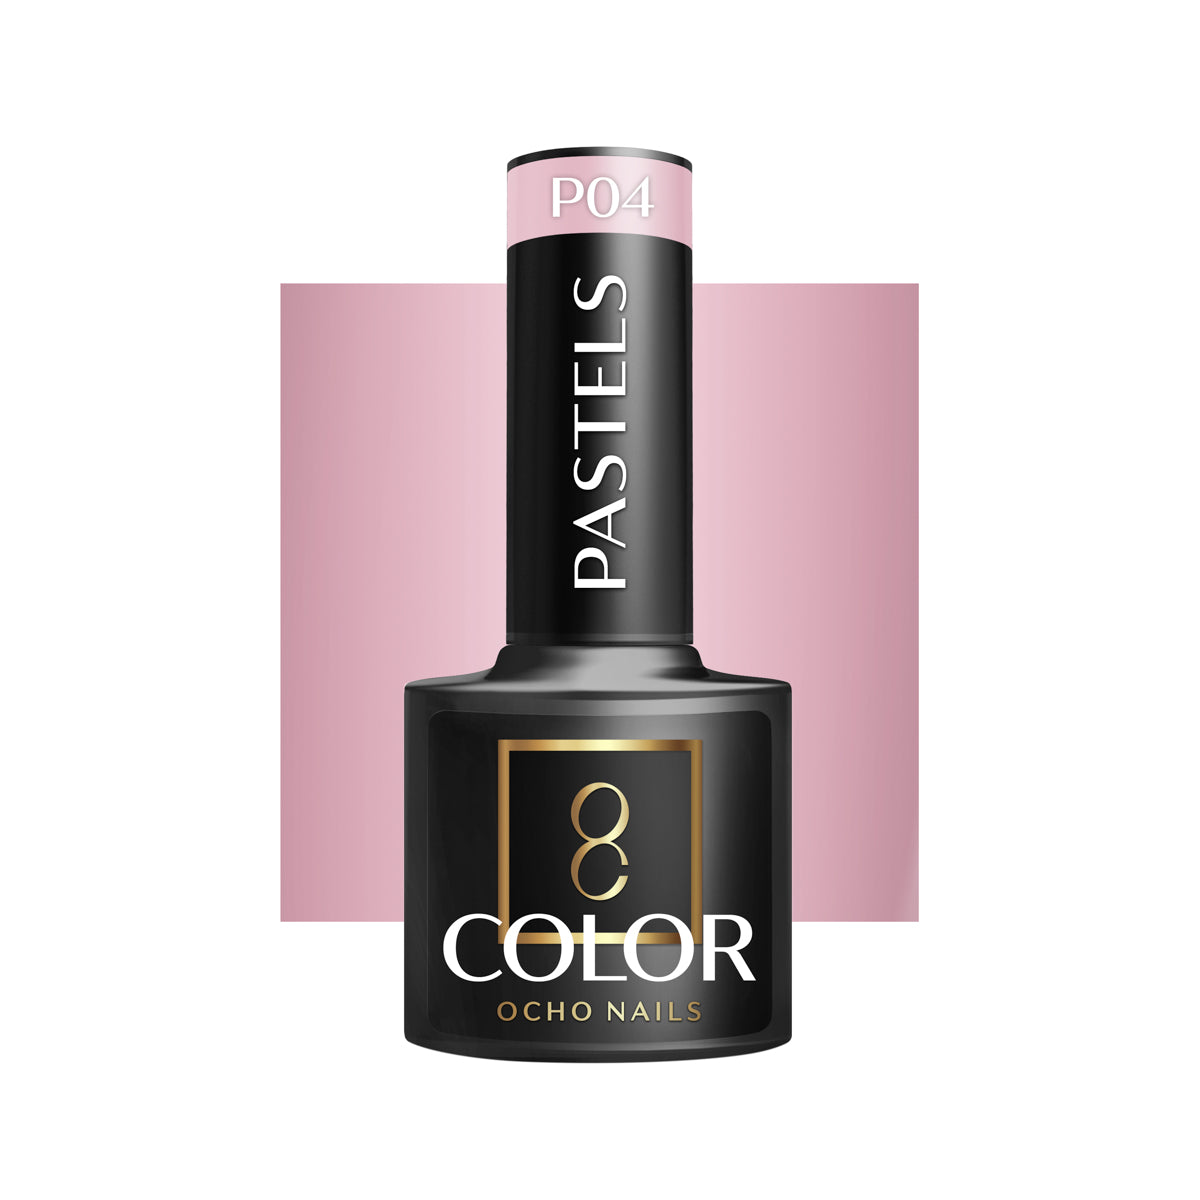 OCHO NAILS Hybride nagellak pastels P04 -5 g